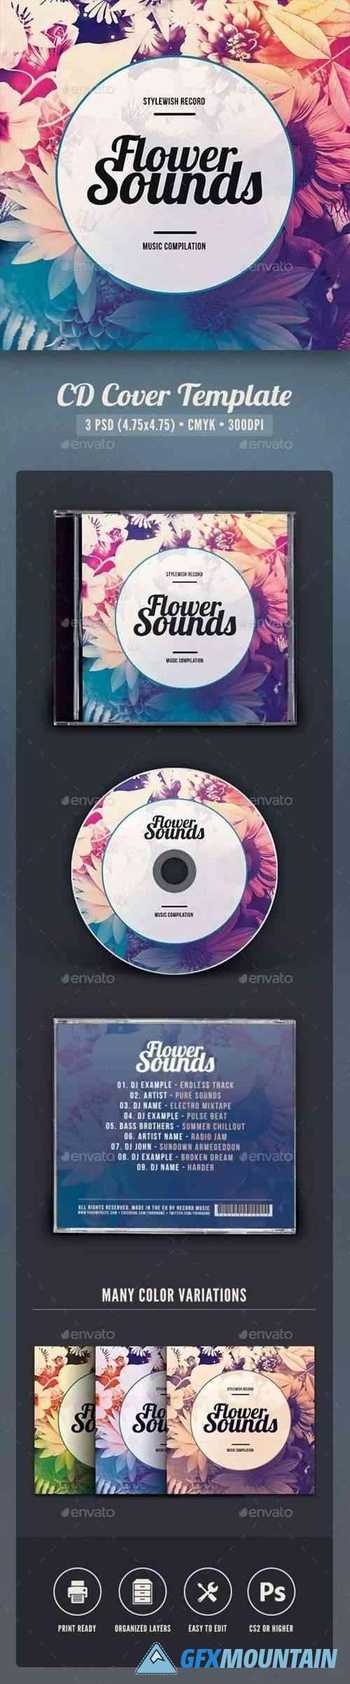 Flower Sounds CD Cover Artwork 30180393